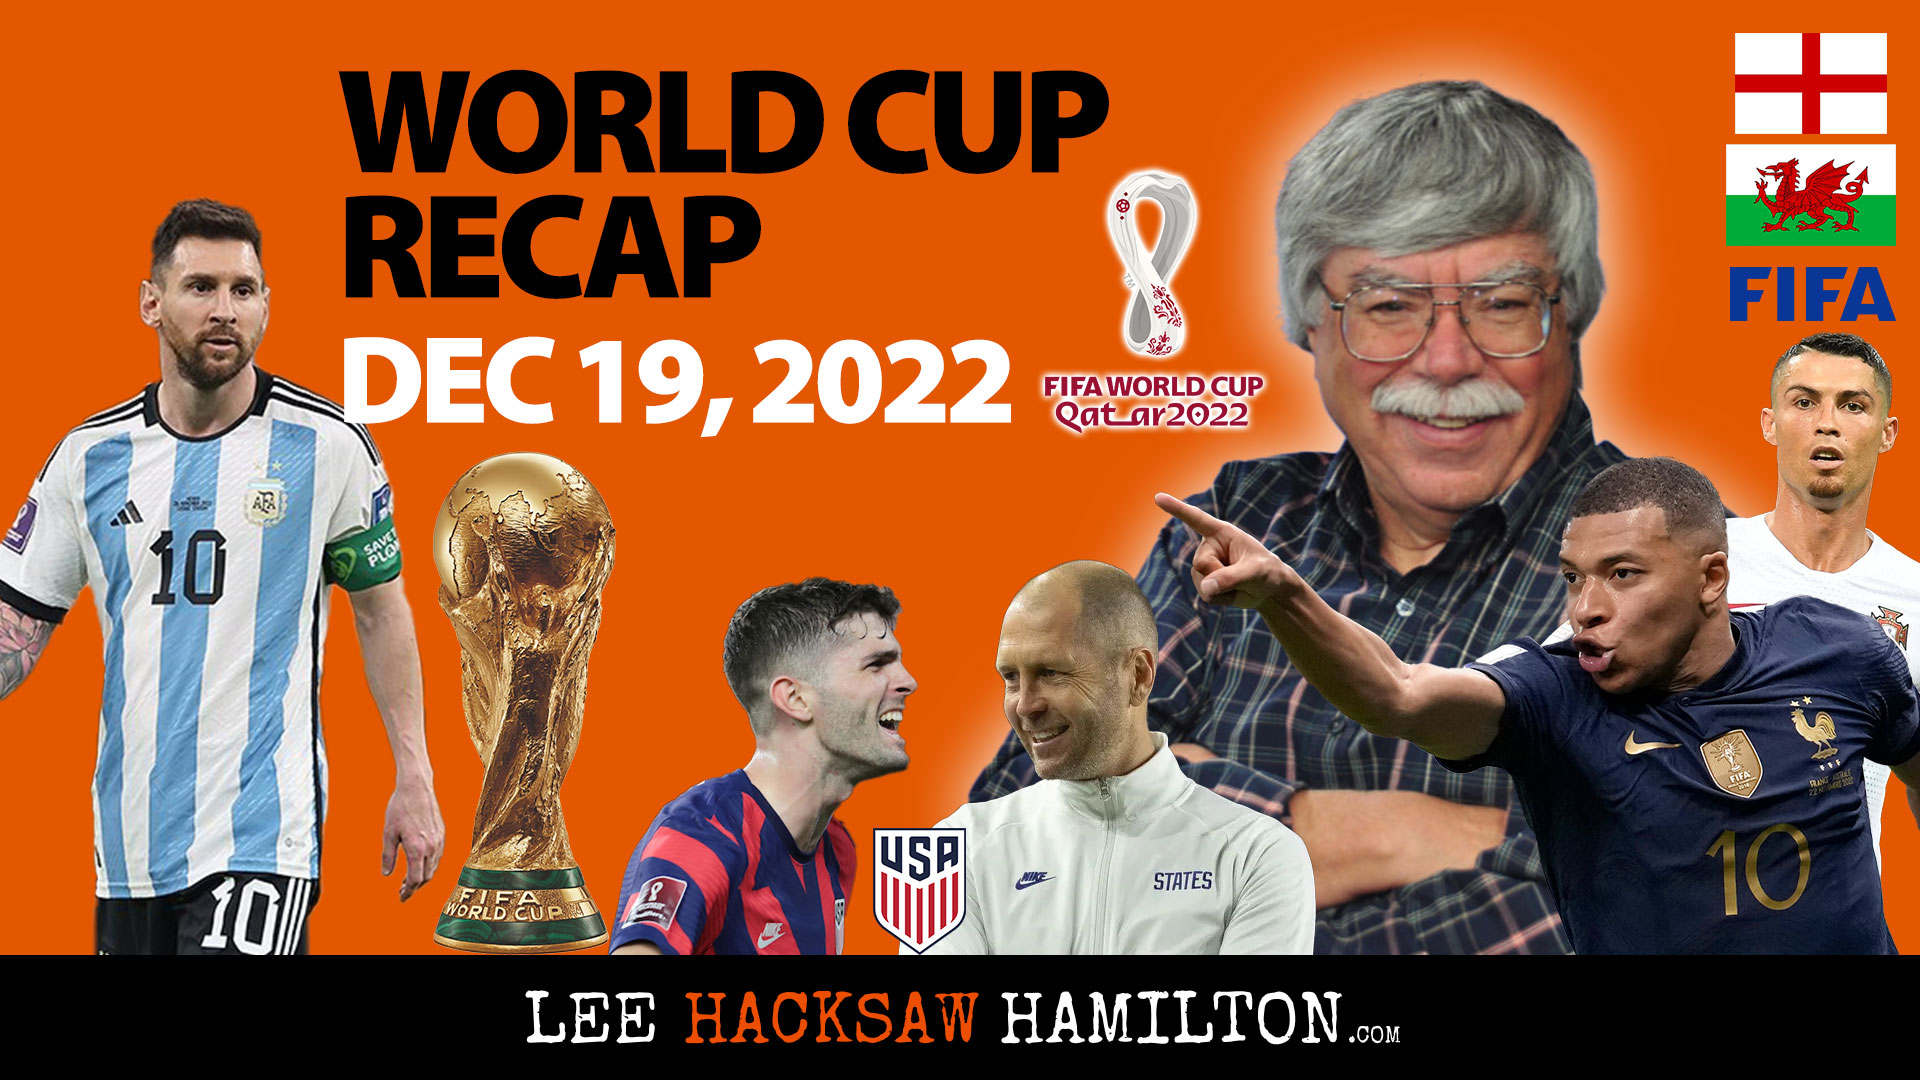 World Cup Recap, Lionel Messi, Mbappe, Lee Hacksaw Hamilton